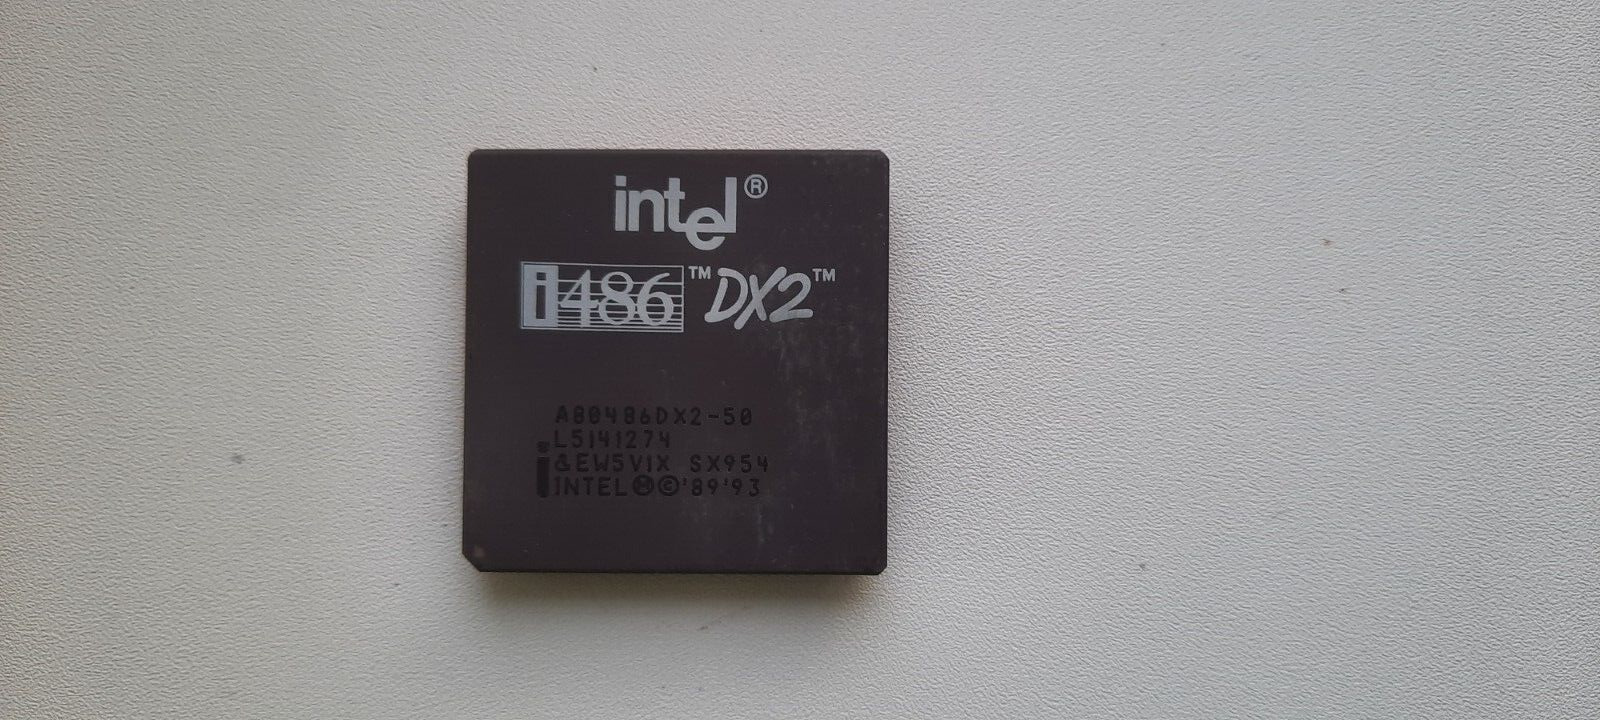 Intel A80486DX2-50 rare SX954 486 vintage CPU GOLD